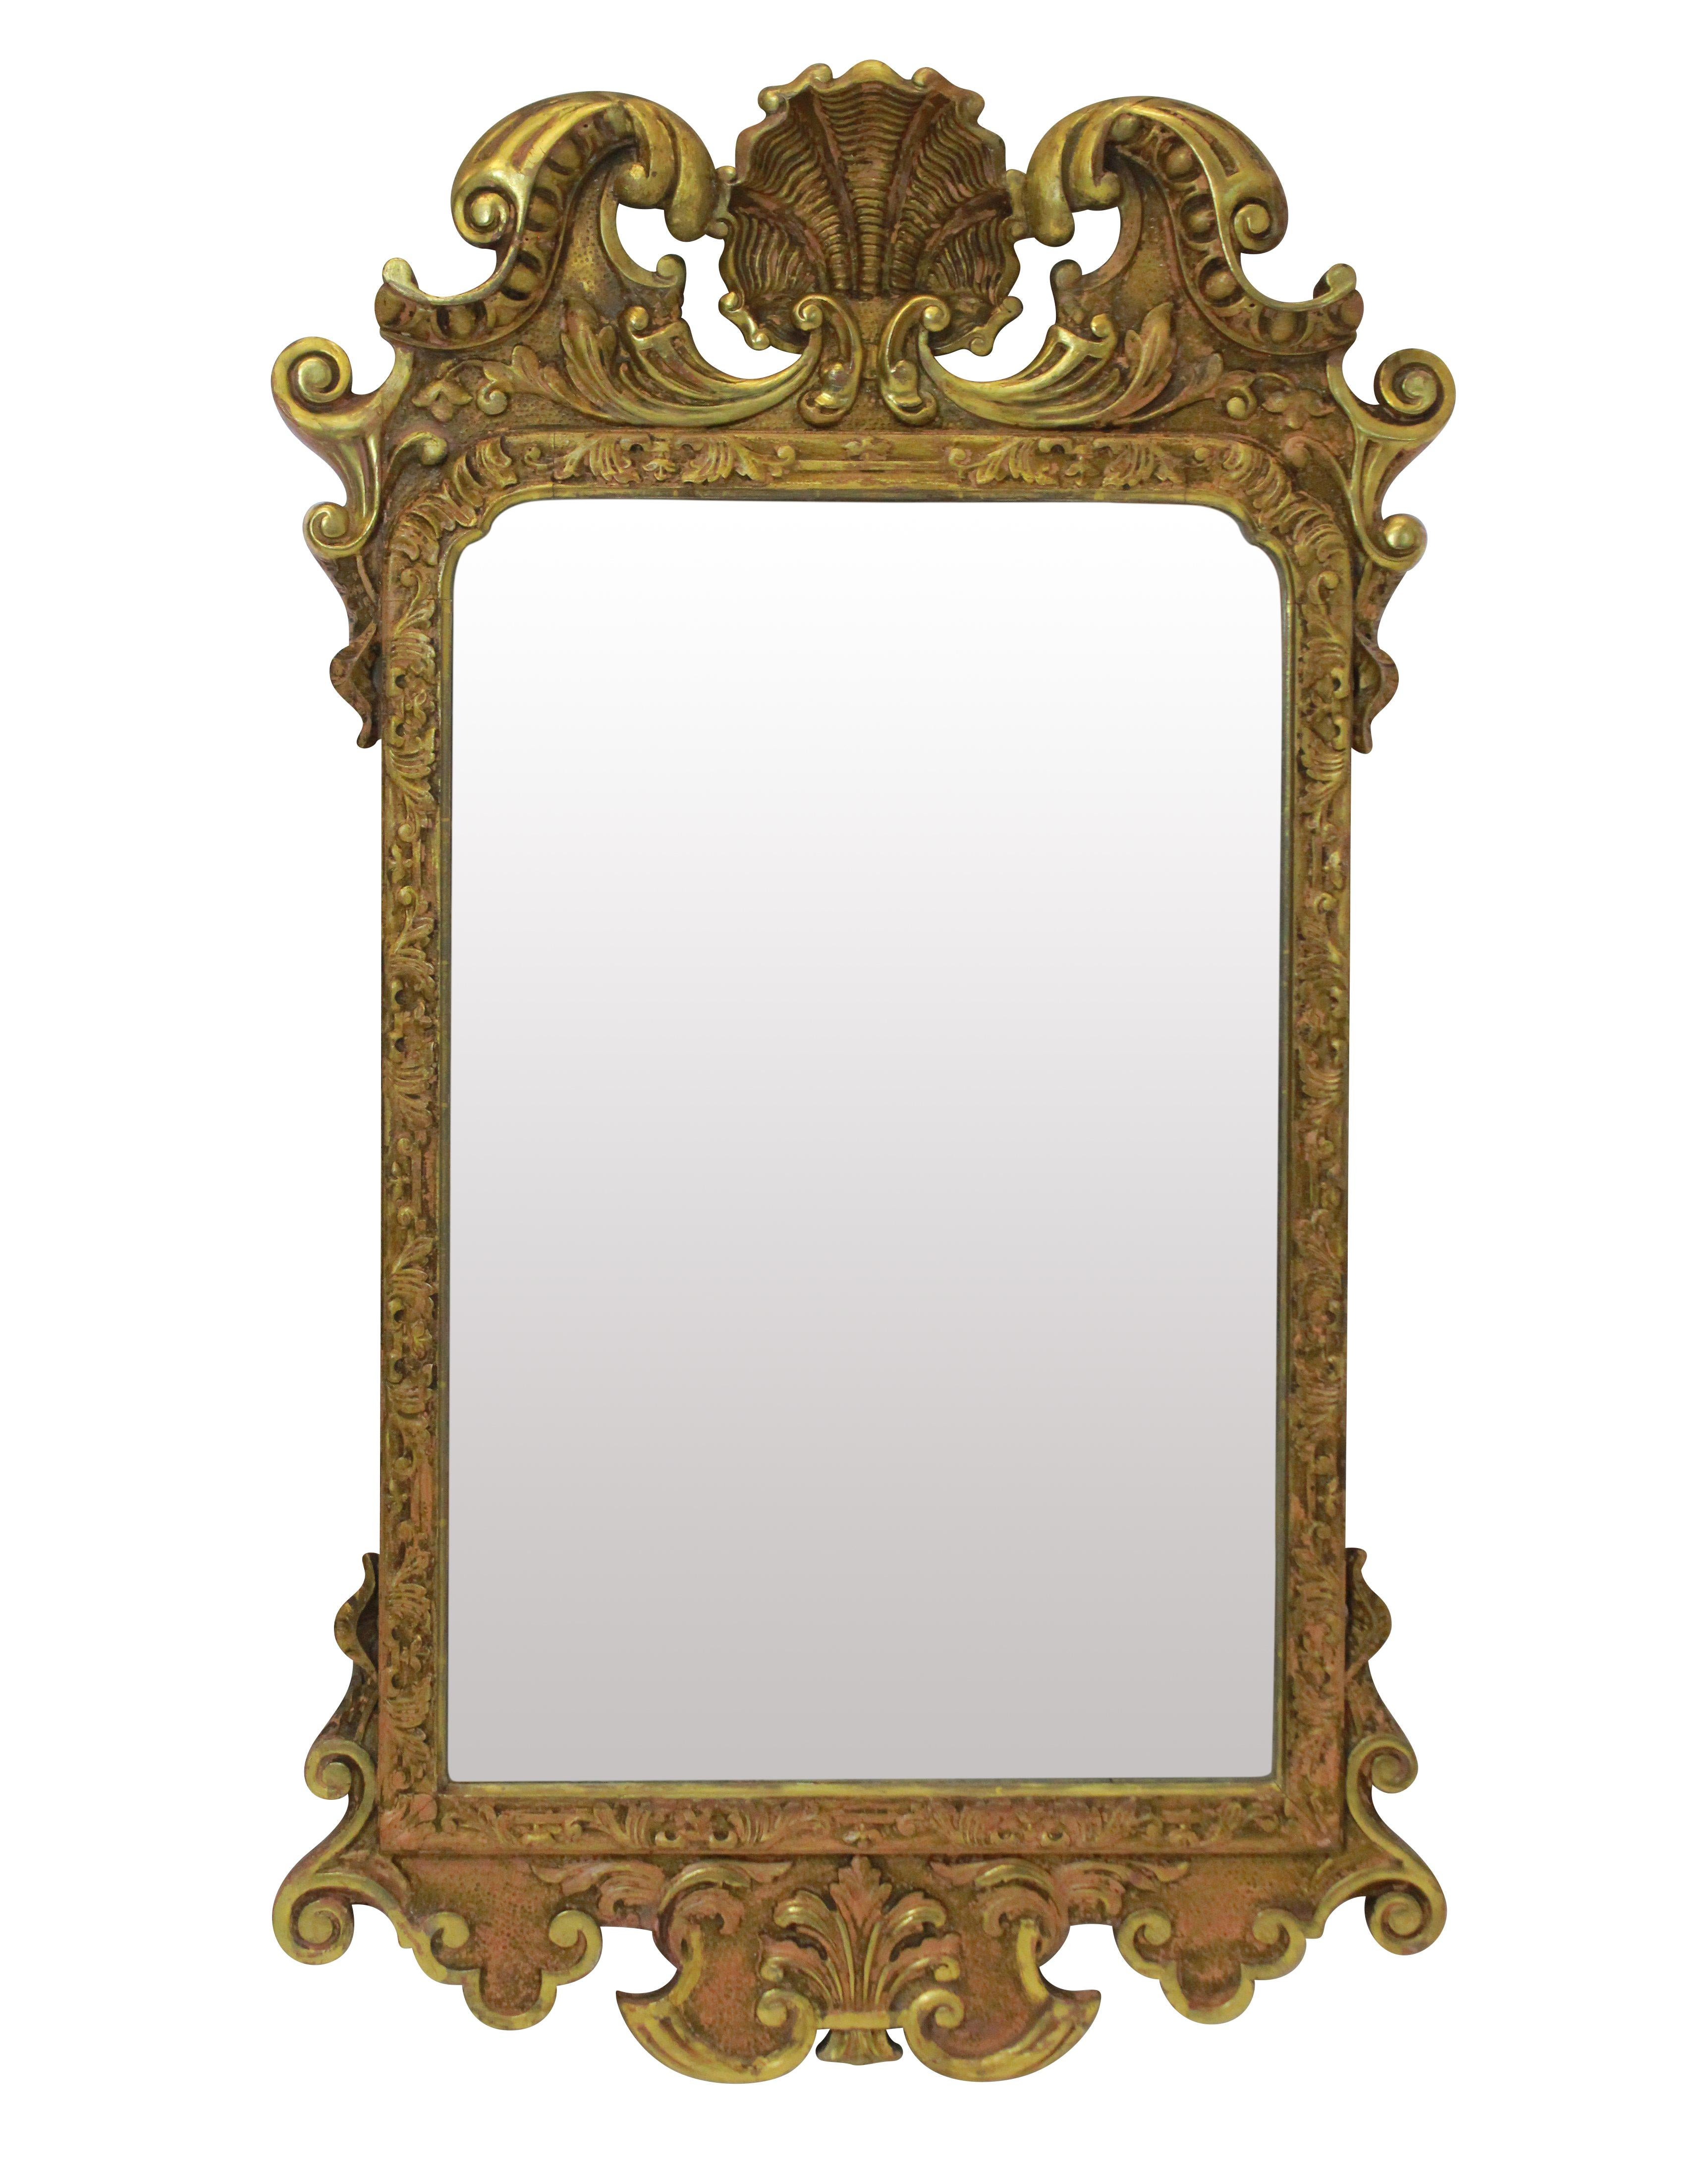 Nicely Carved George III Giltwood Mirror (Frühes 19. Jahrhundert)